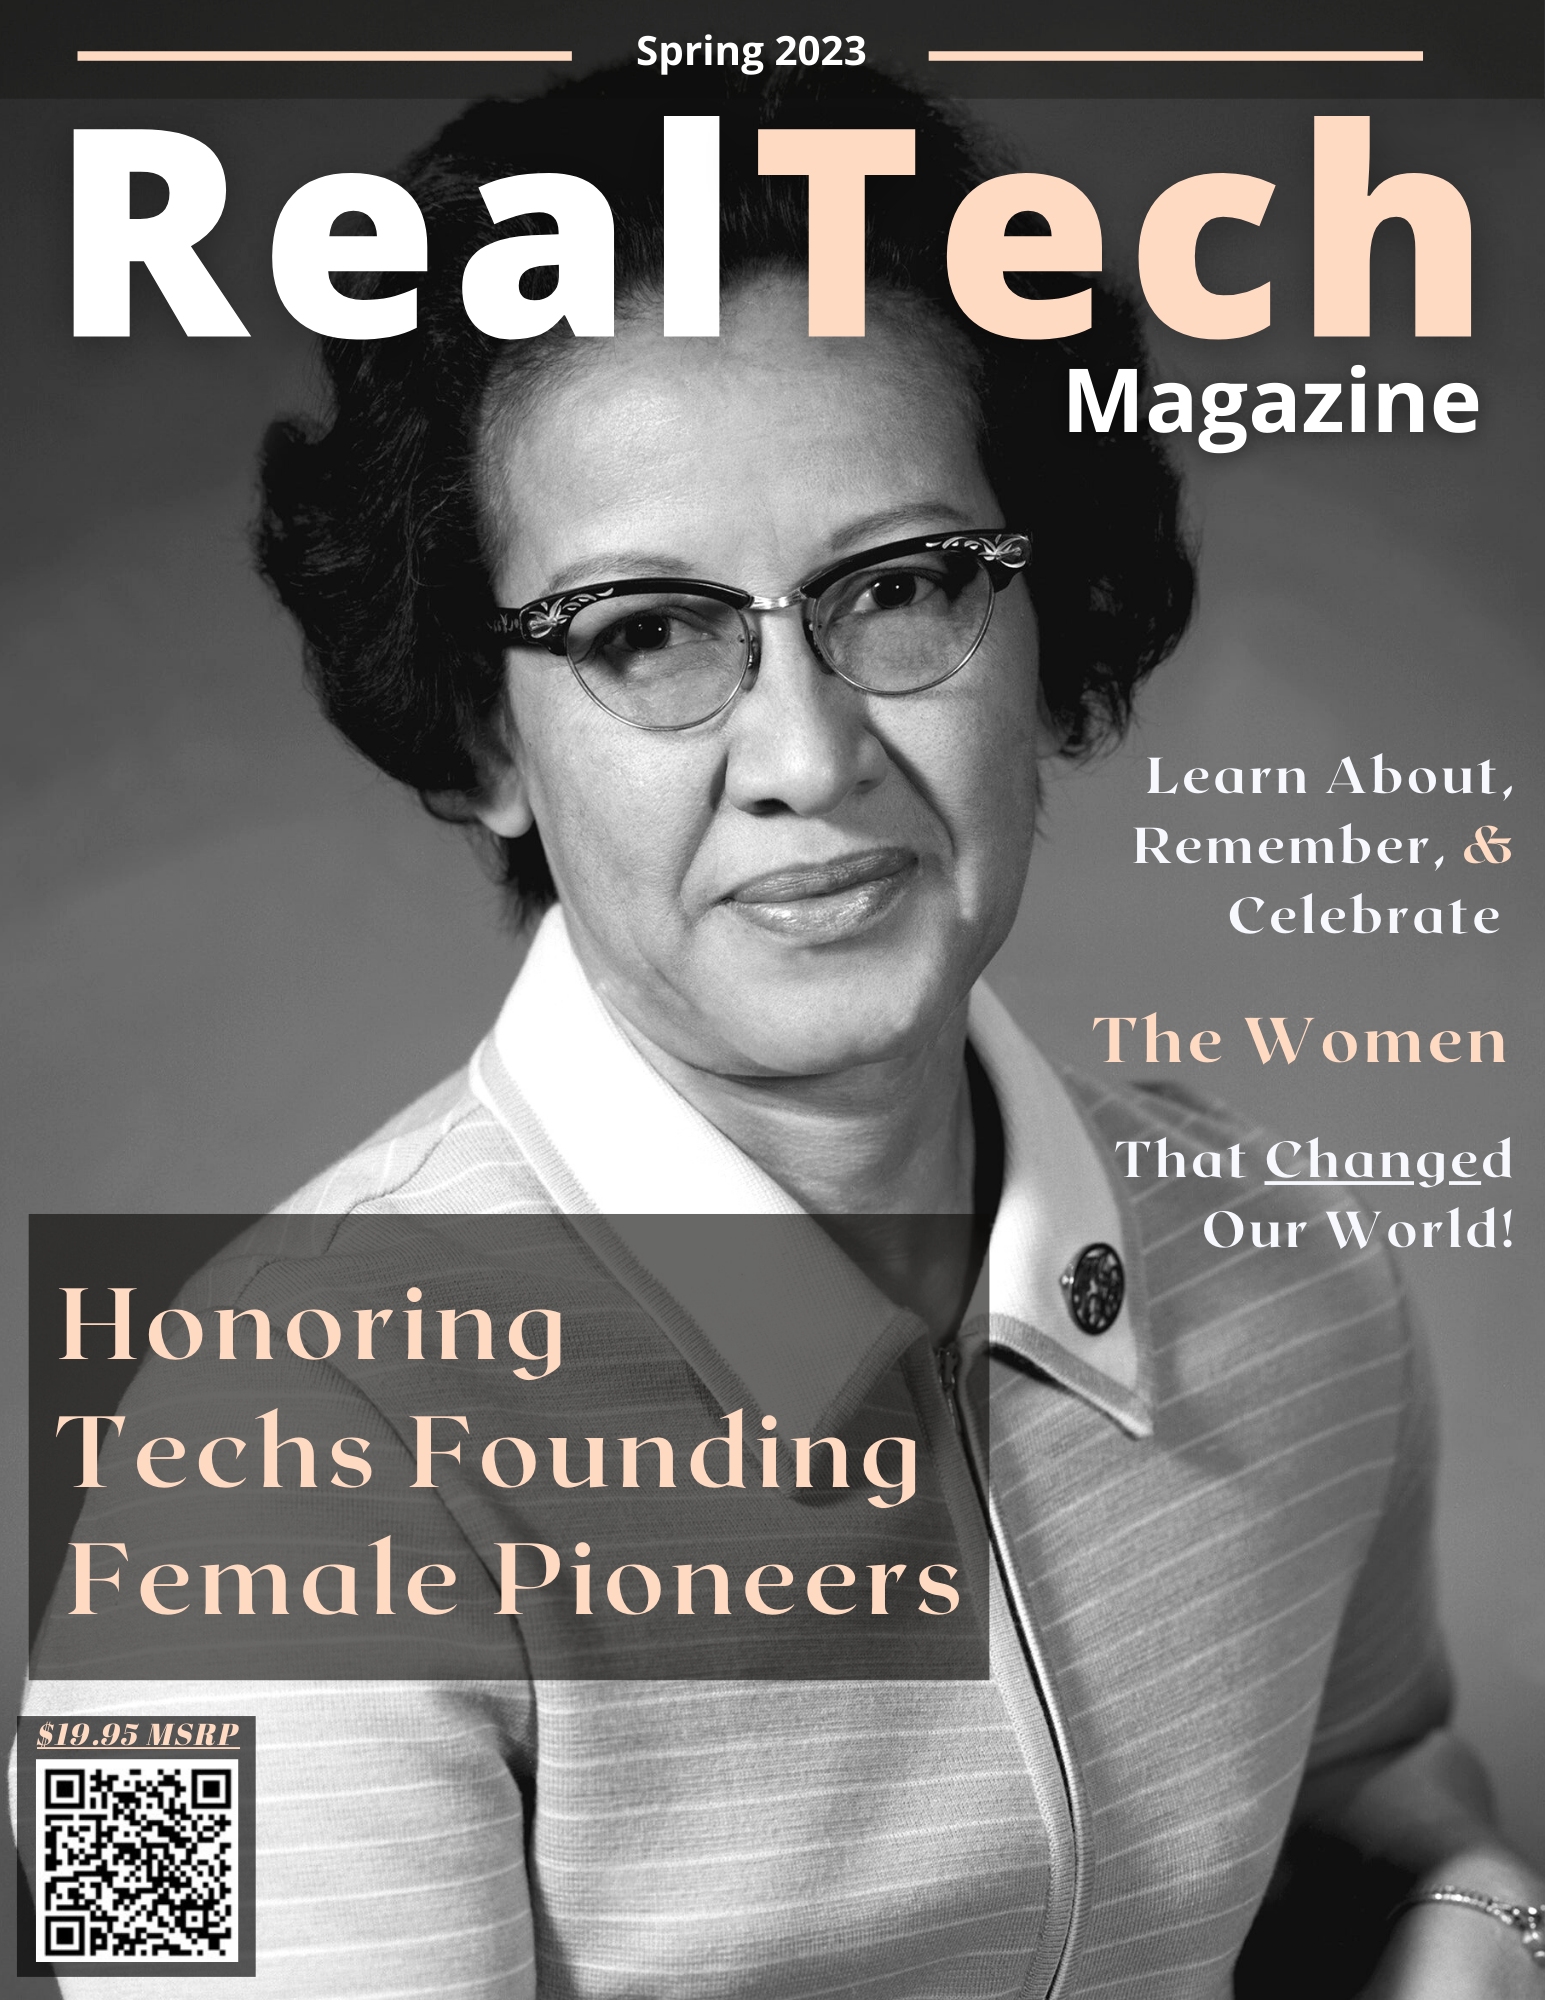 RealTech Magazine Spring 2023 Issue